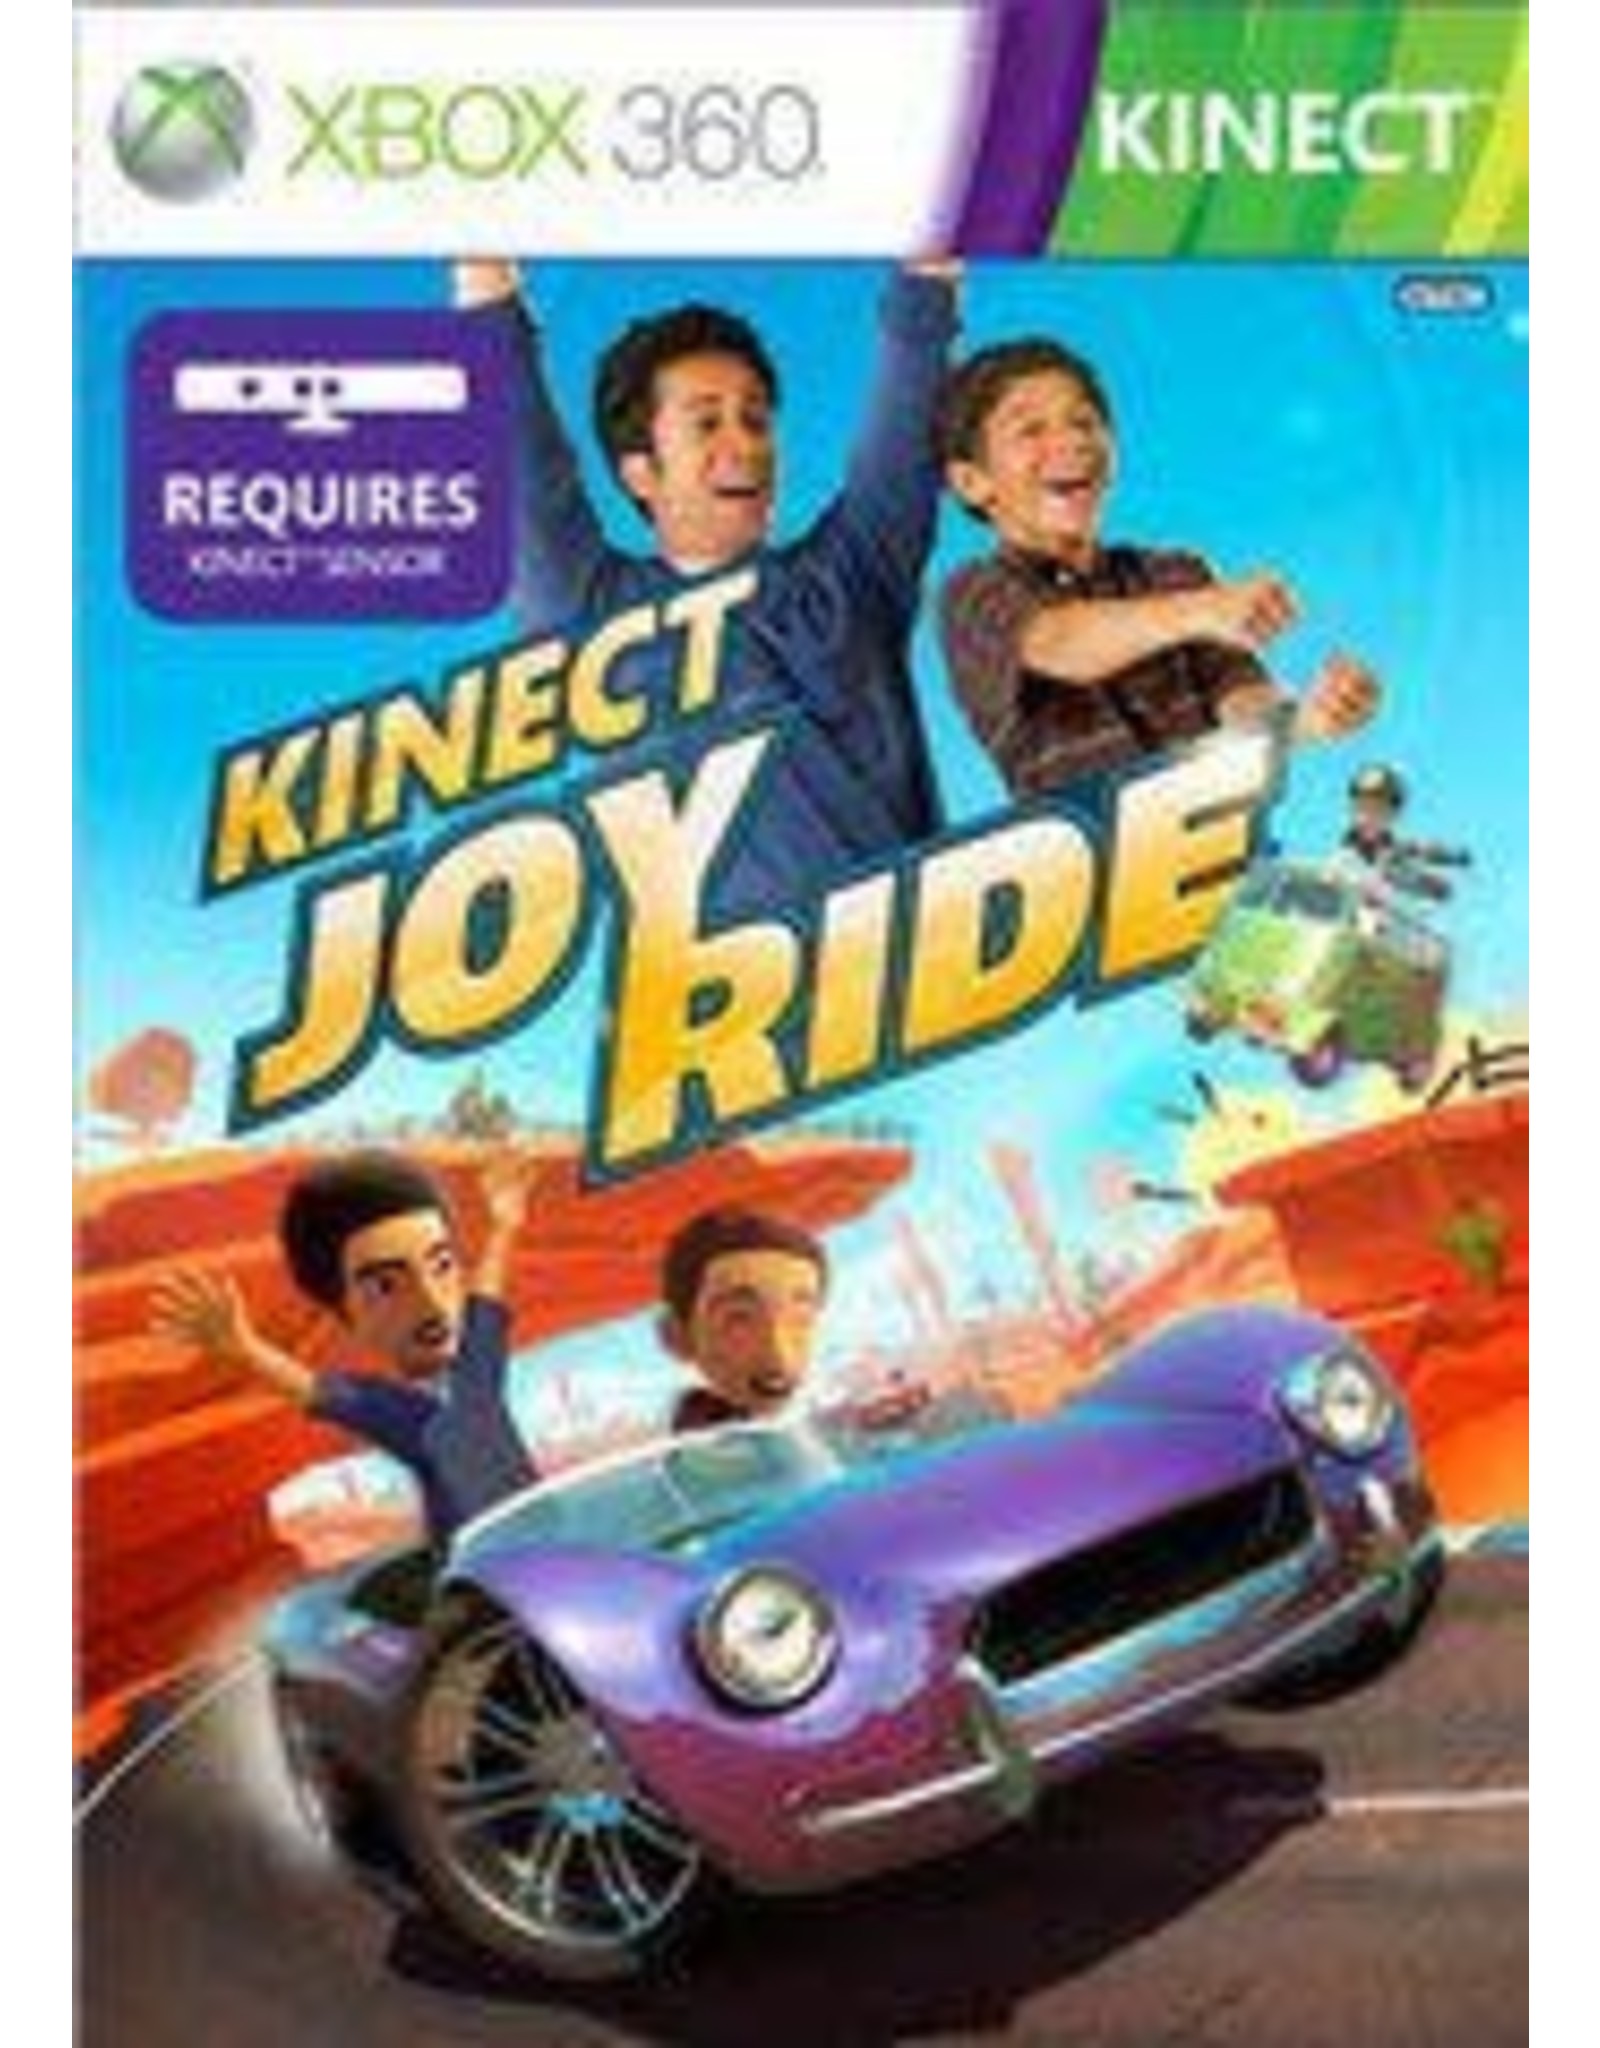 Xbox 360 Kinect Joy Ride (No Manual)